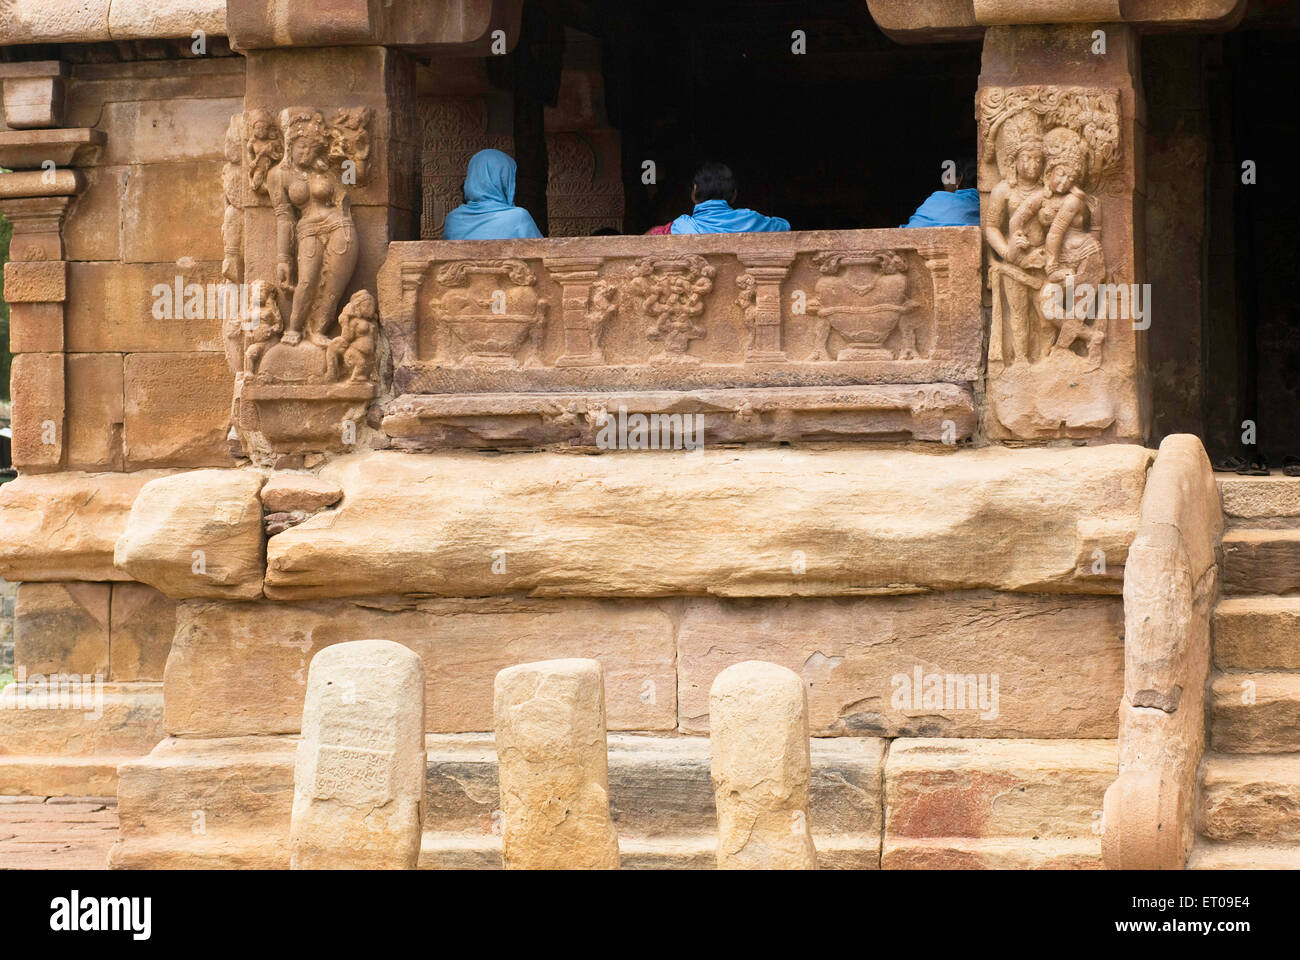 Ladkhan temple built in 7th century ; Aihole ; Karnataka ; India Stock Photo